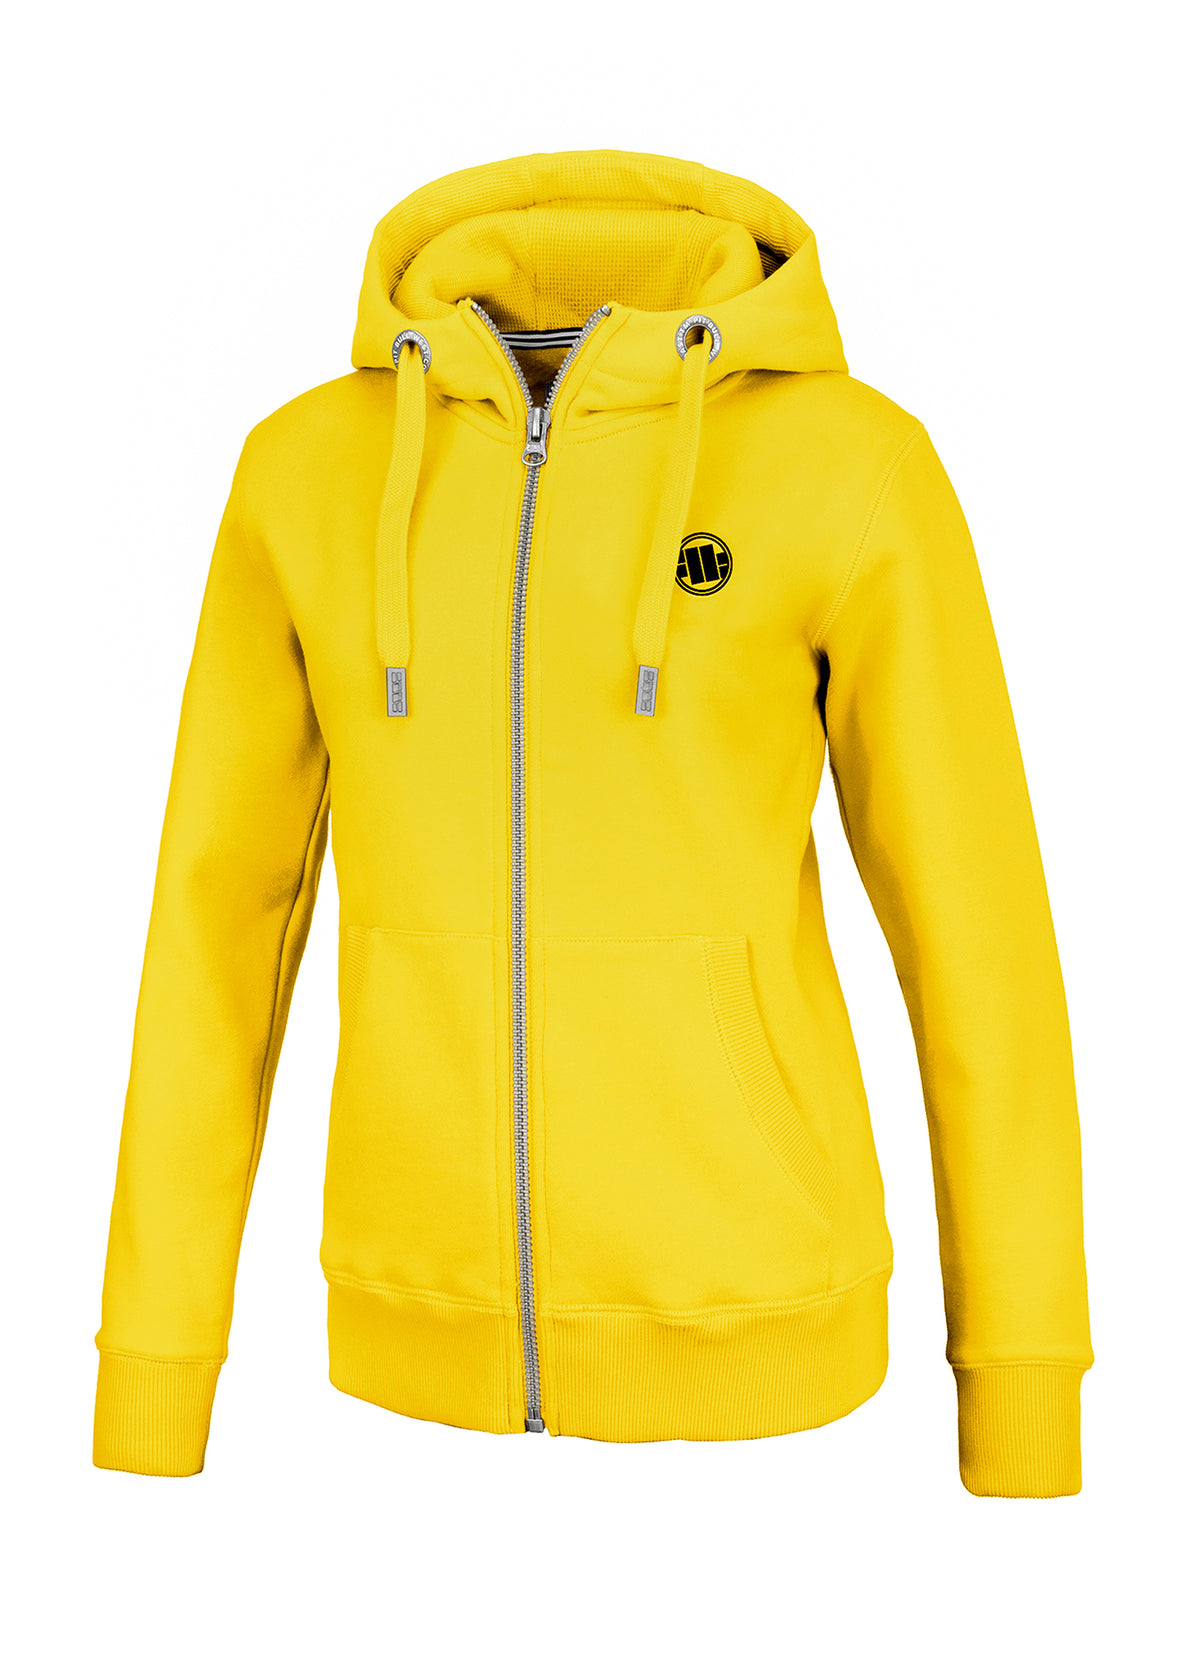 SMALL LOGO Yellow hooded zip.